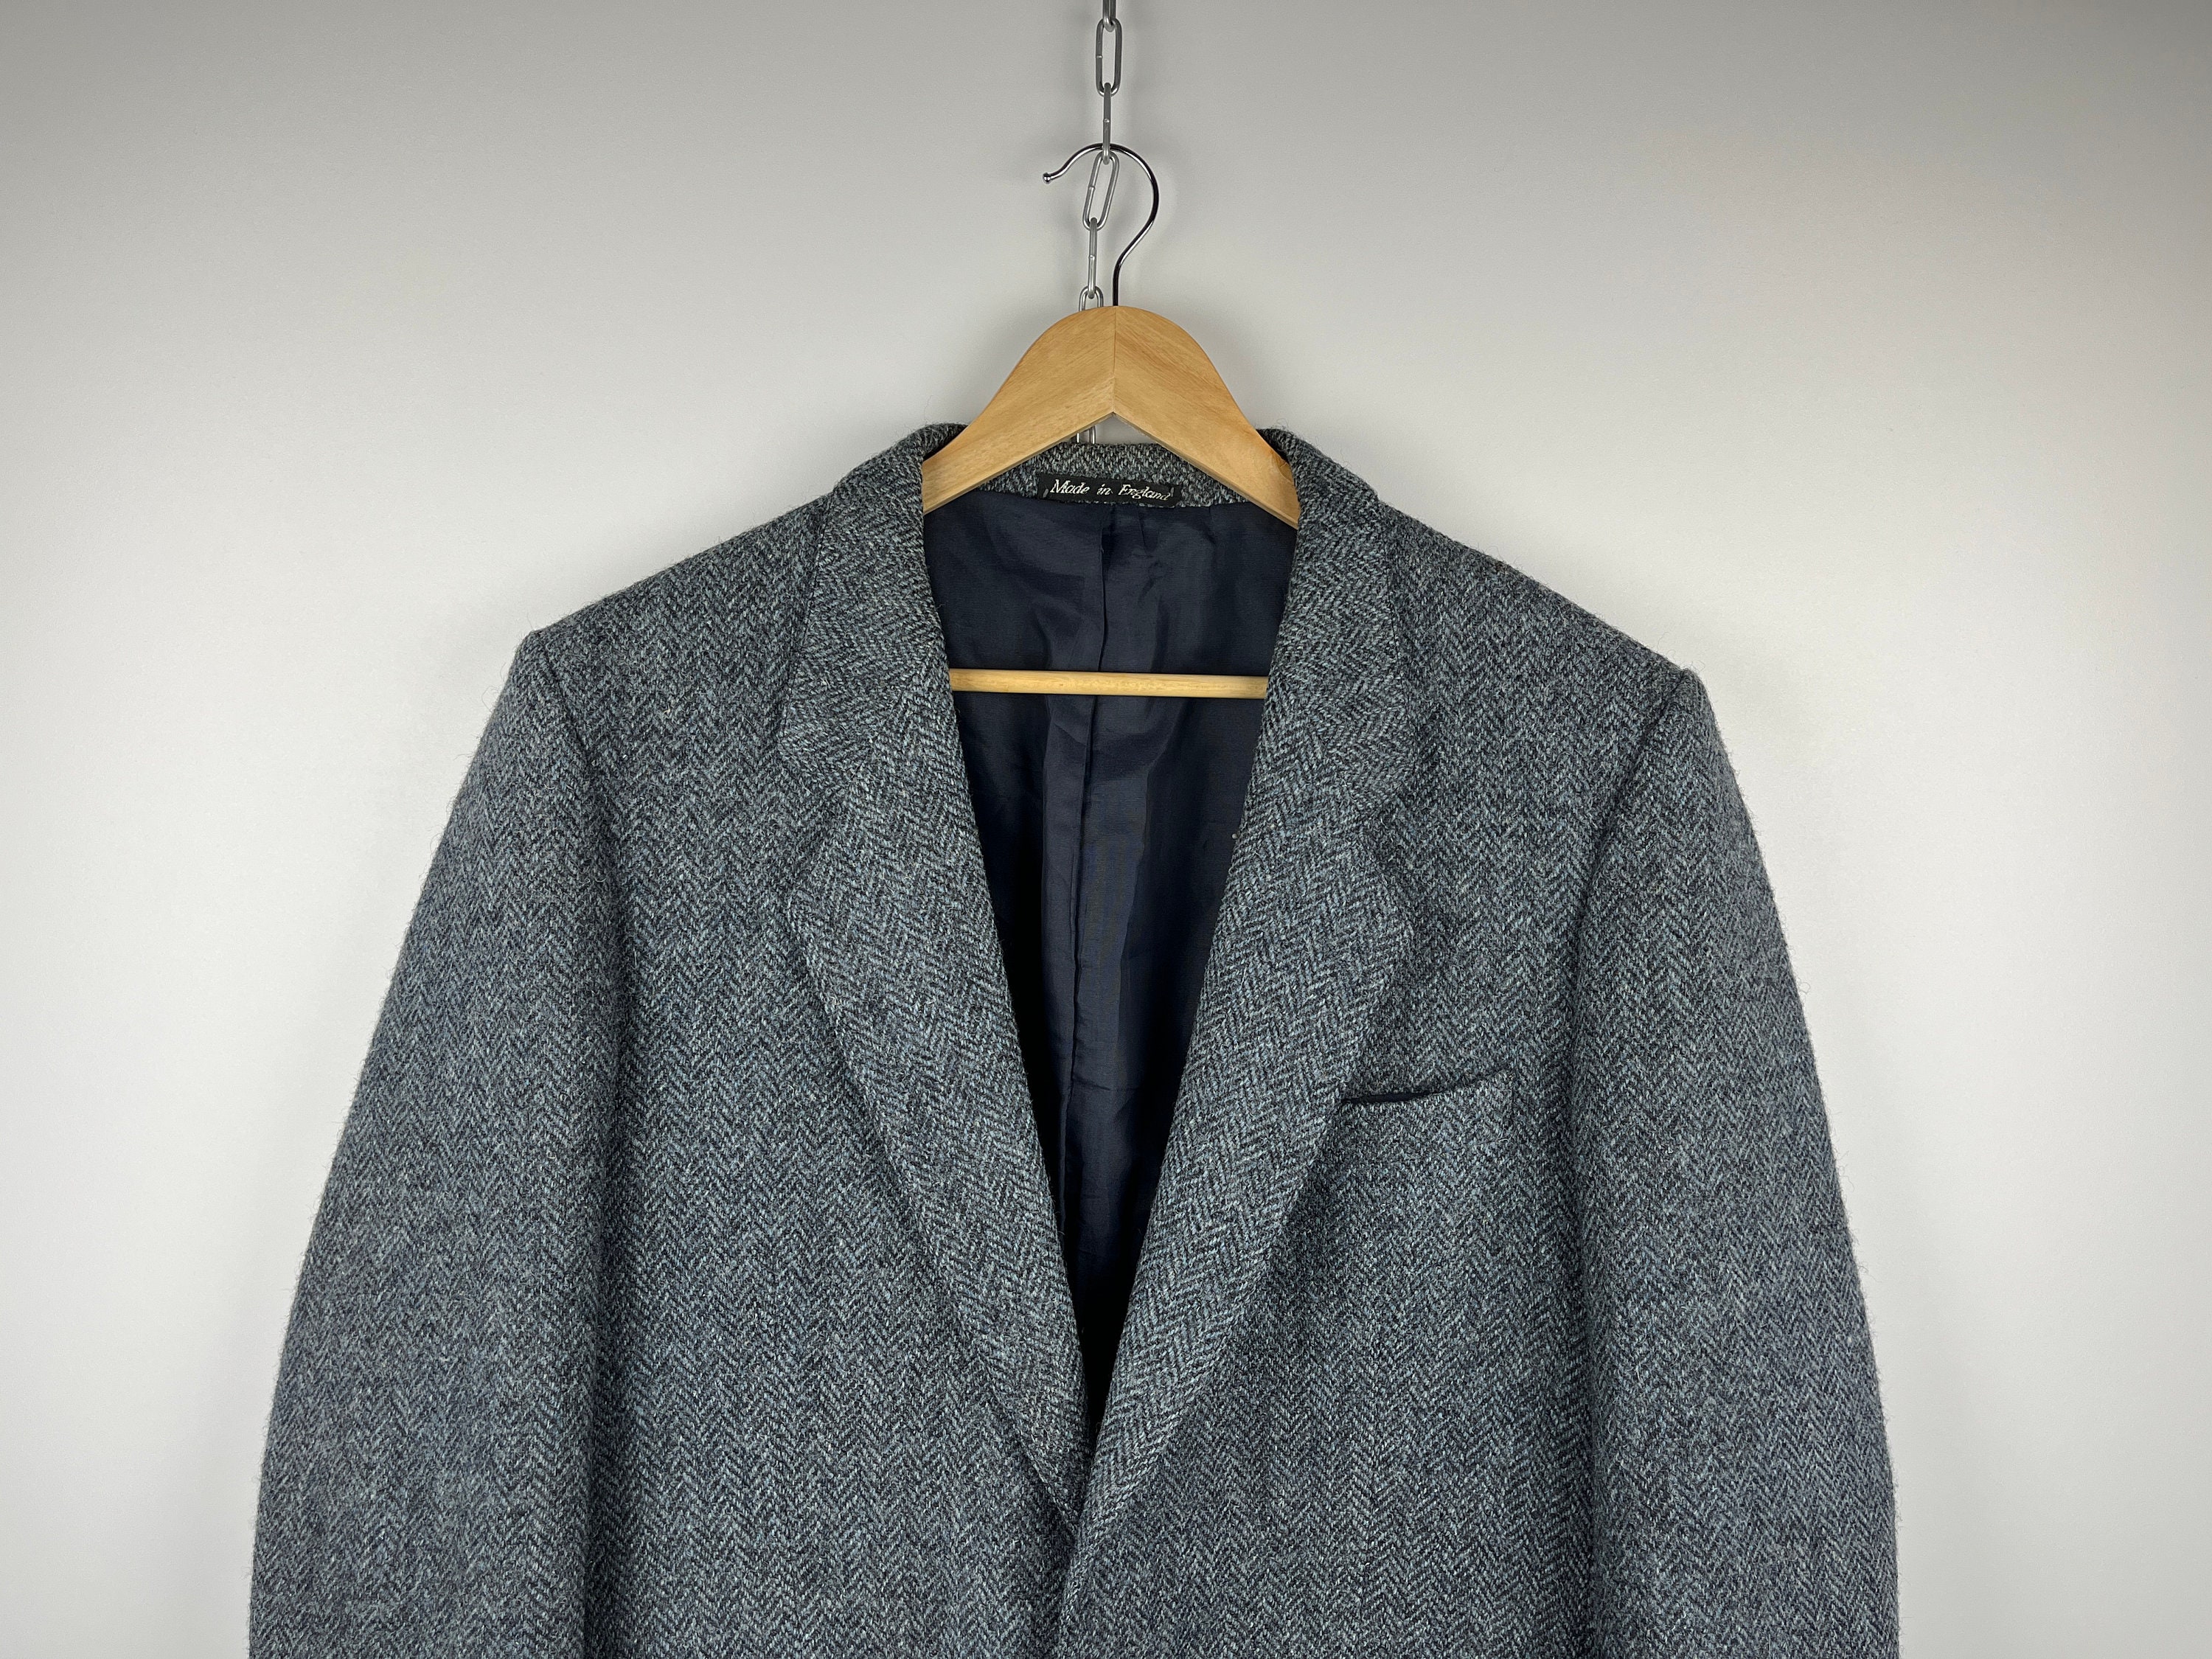 Lamé Tweed Jacket, Authentic & Vintage